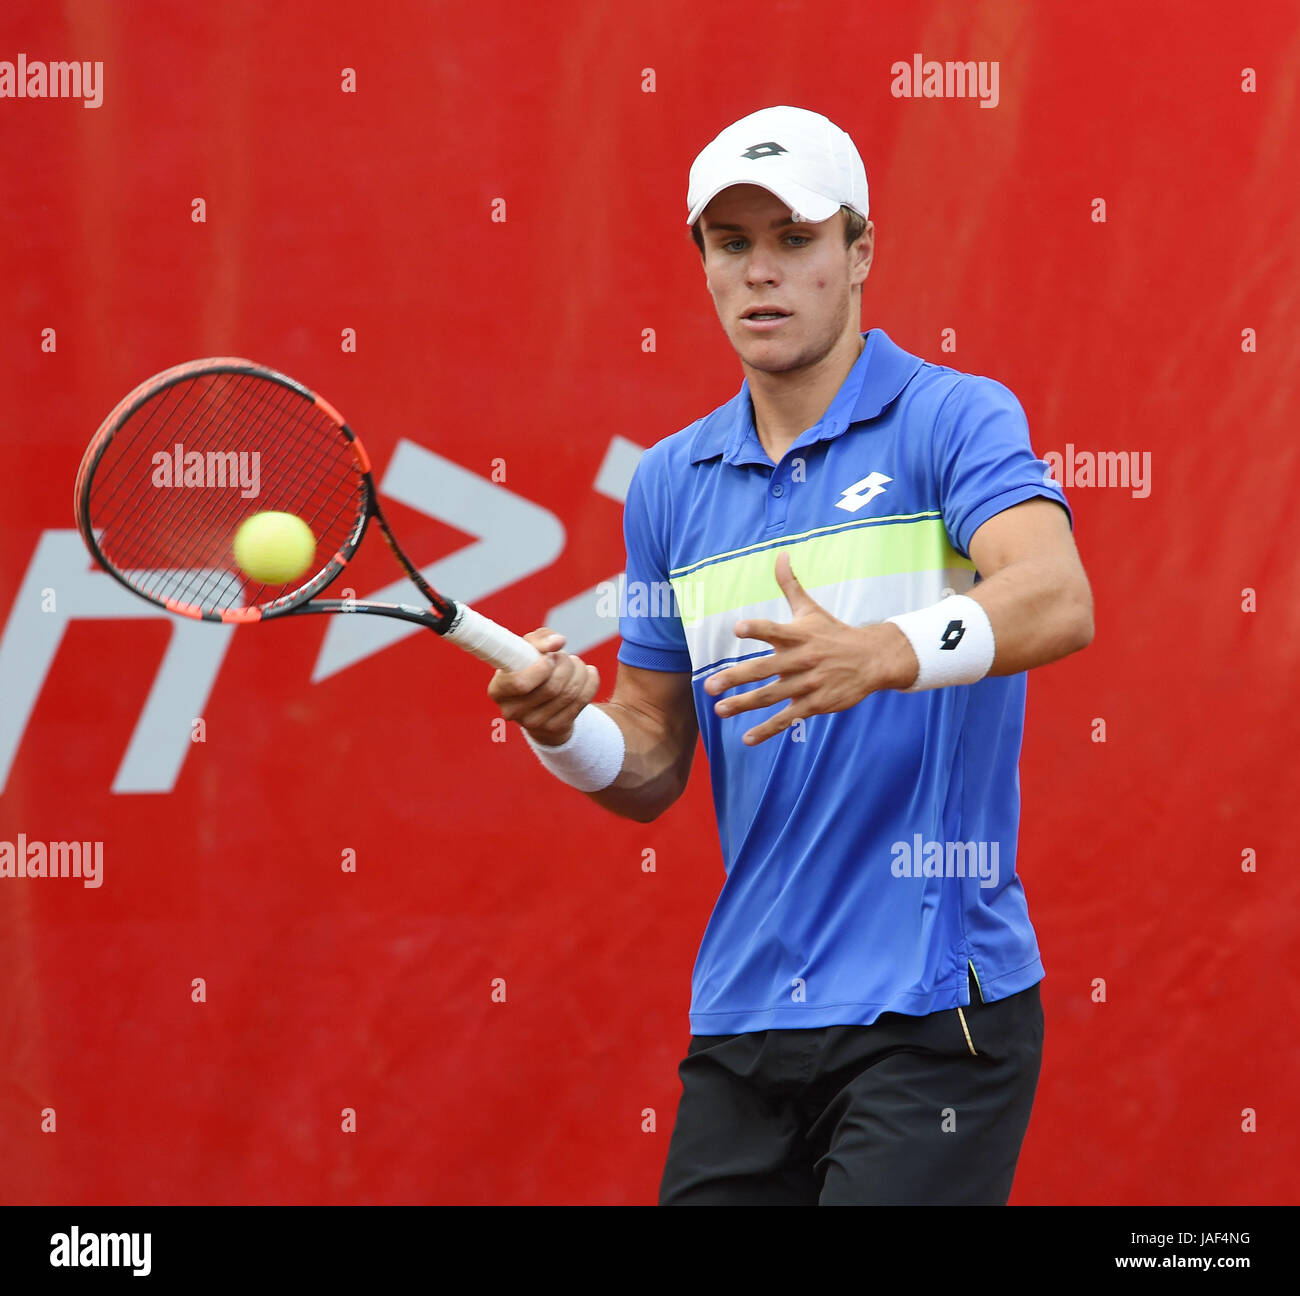 Tennis player dmitry popko kazakhstan hi-res stock photography and images